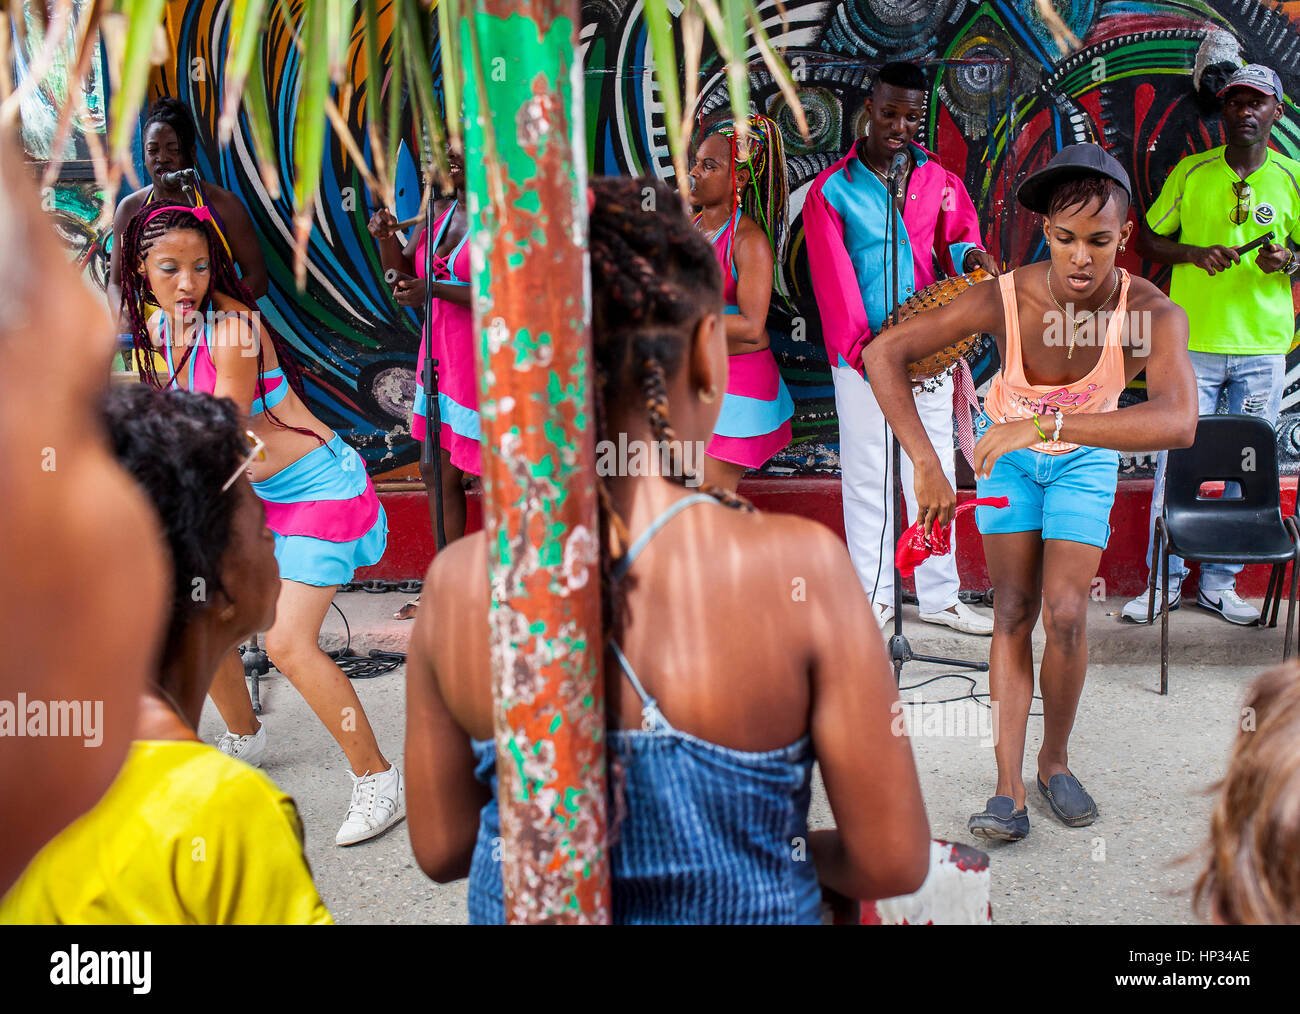 Dancing, Rumba show, on Sunday in Callejon de Hamel, Centro Habana district, La Habana, Cuba Stock Photo